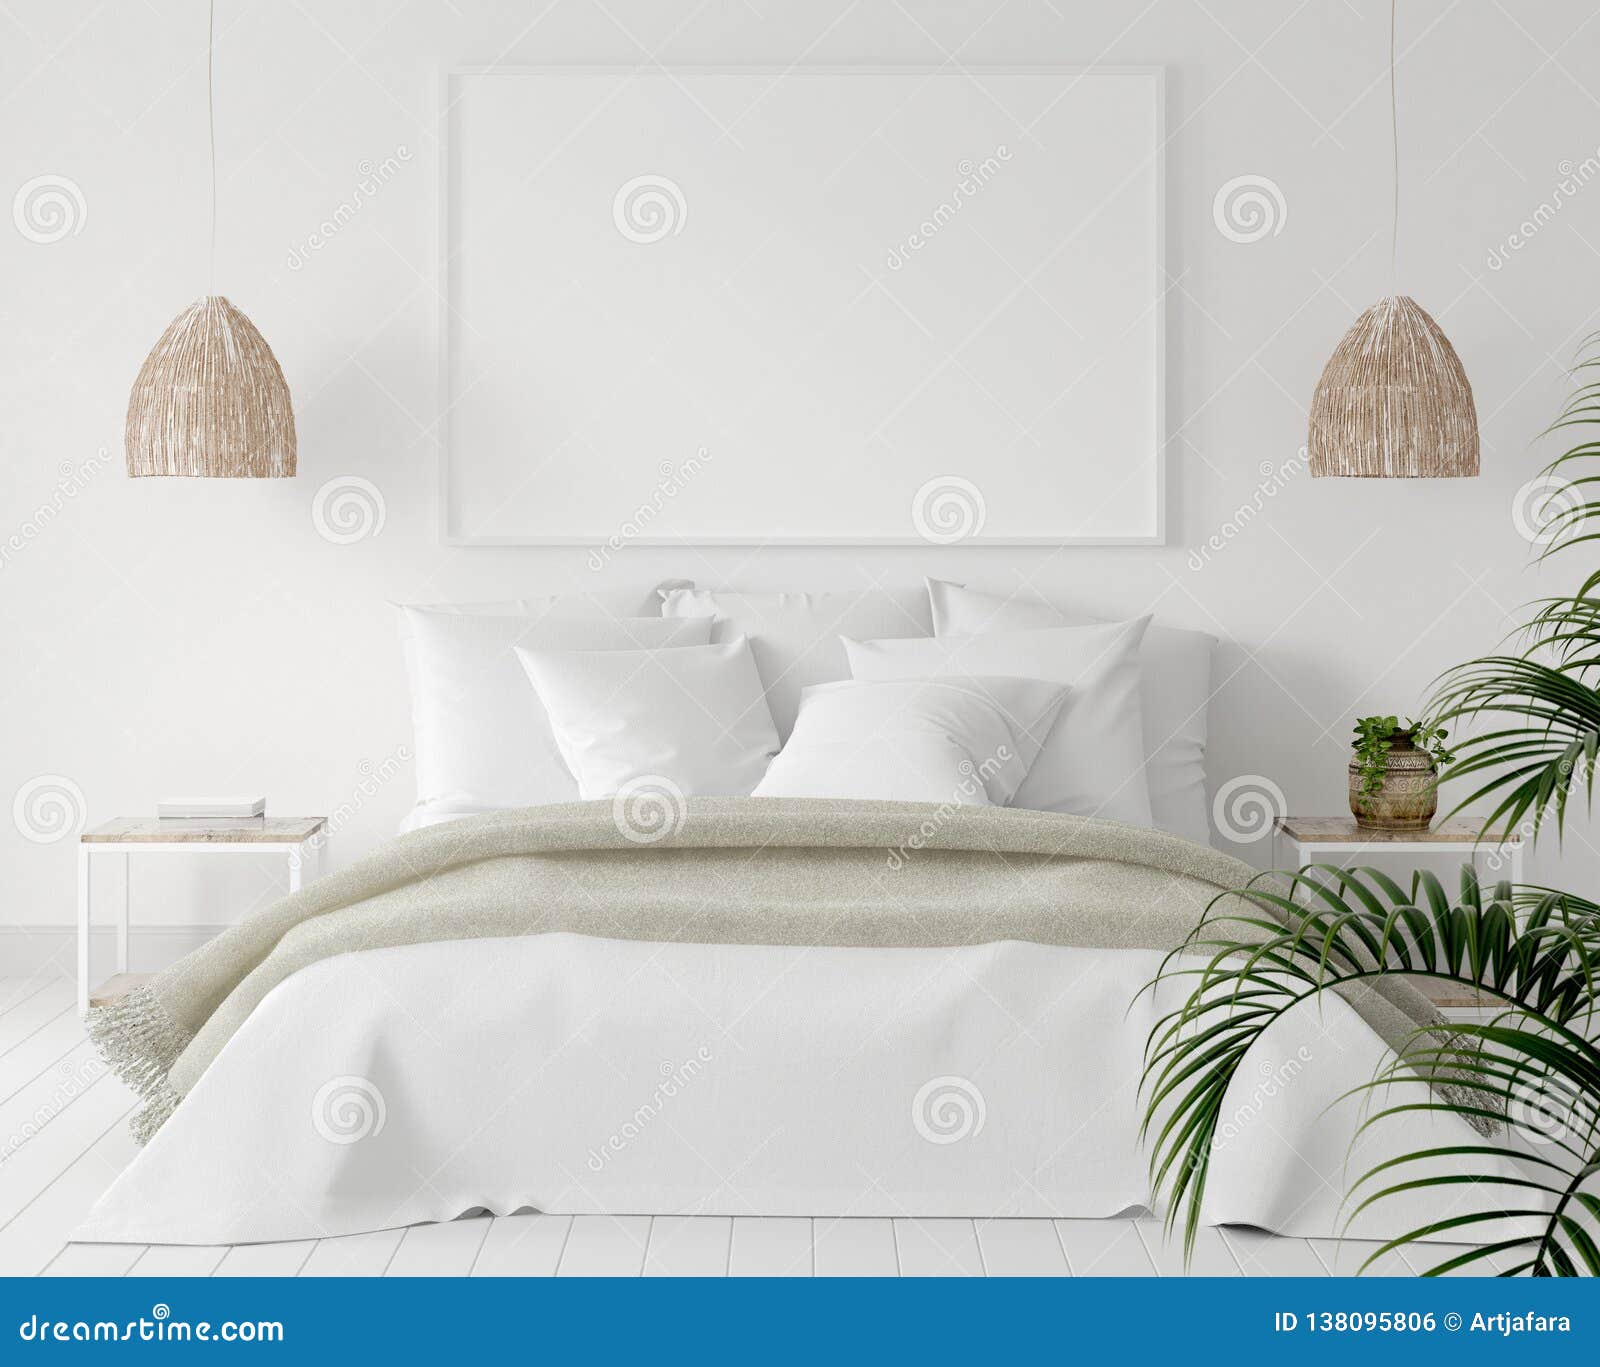 mock-up poster frame in bedroom, scandinavian style